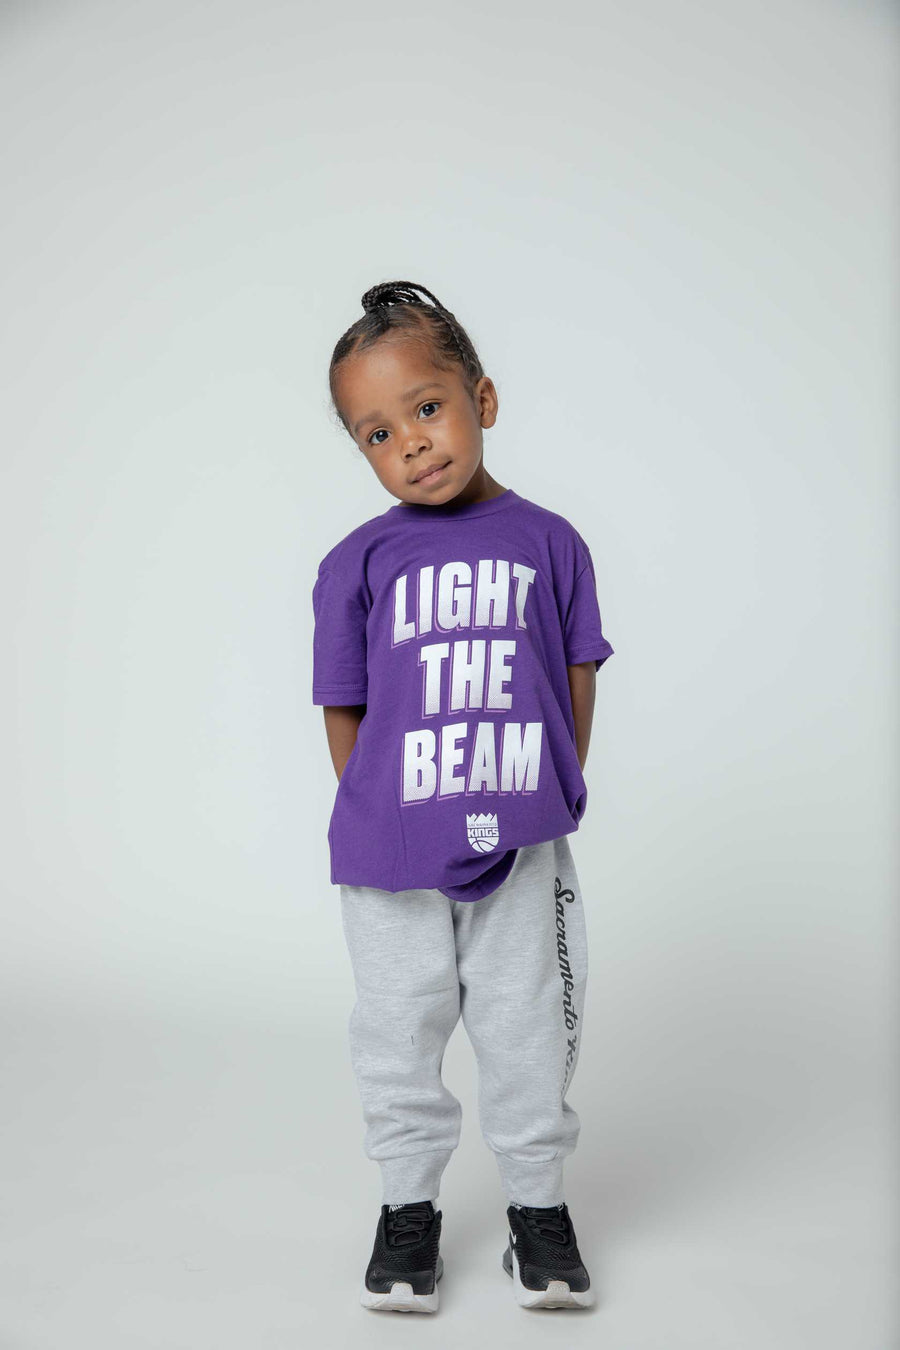 Sacramento Kings Light The Beam 2023 Shirt